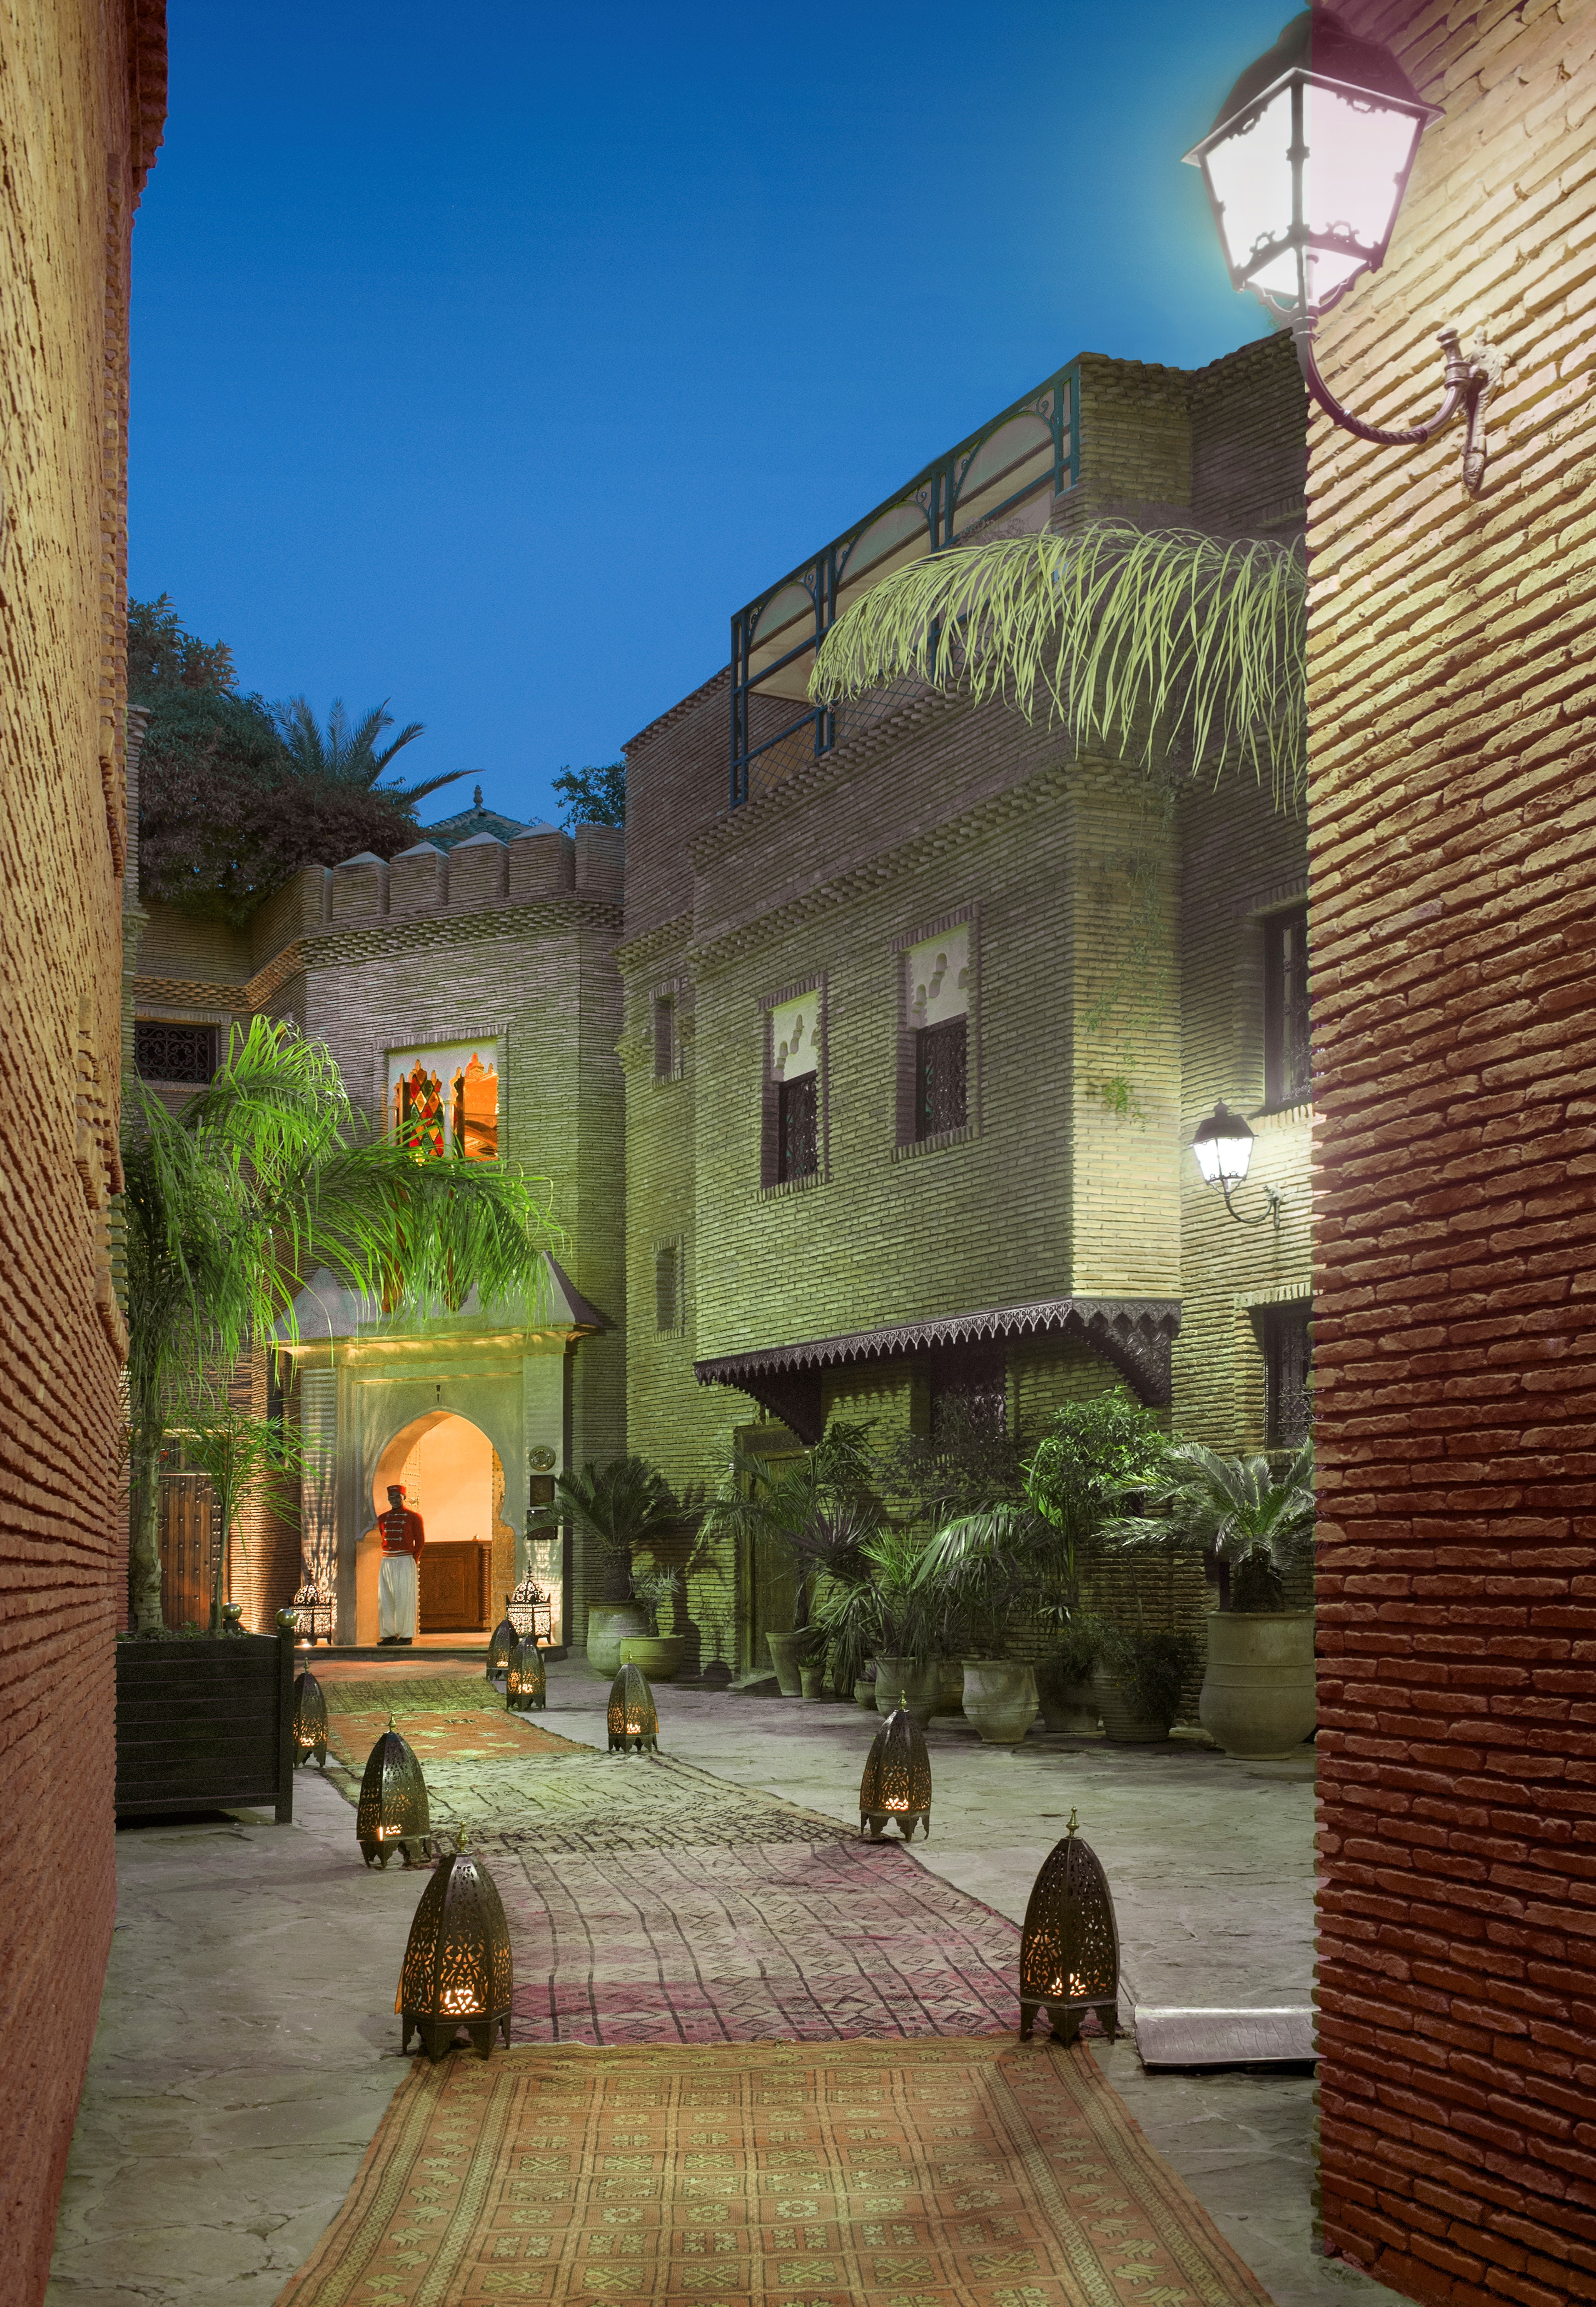 La Sultana Marrakech Entrance